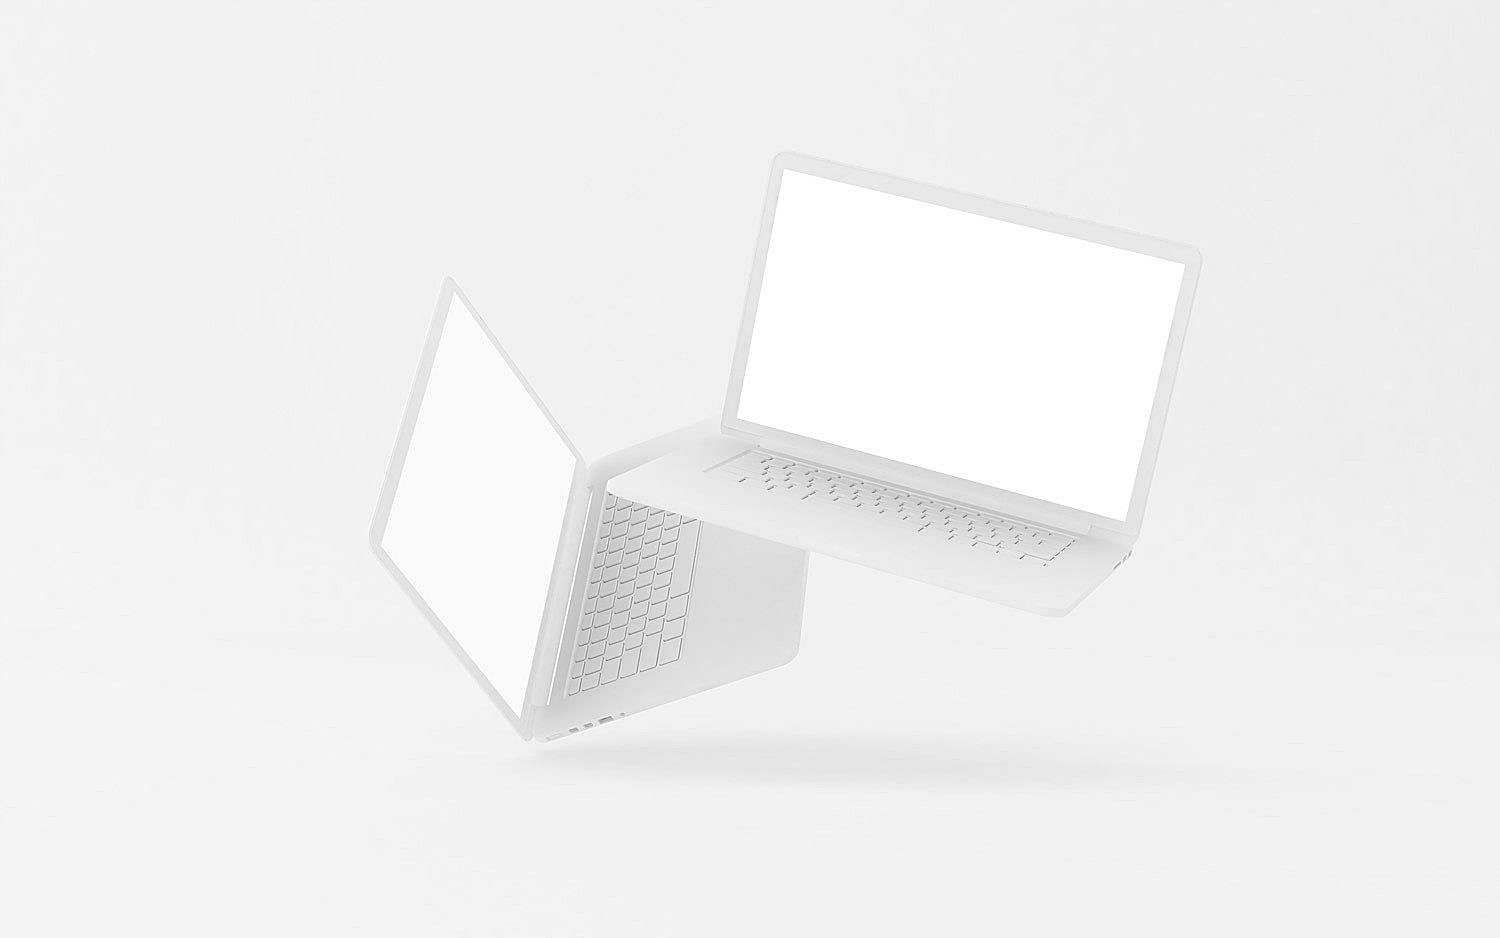 MacBook Pro Mockup Free. MacBook screen